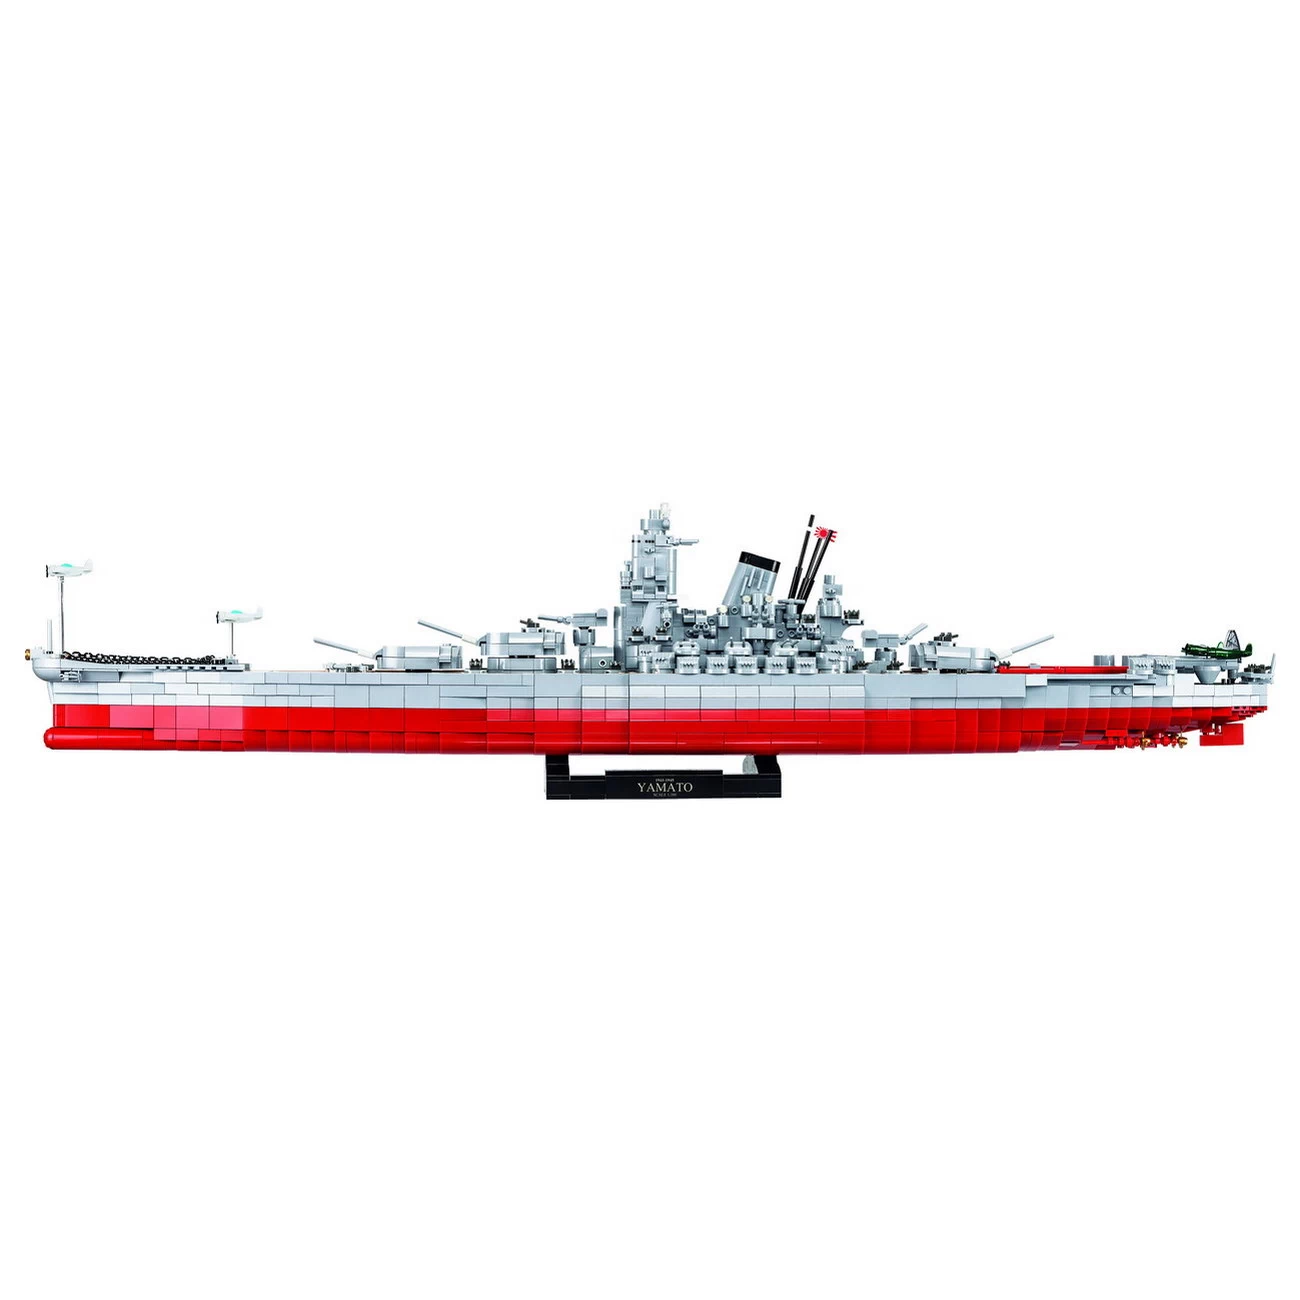 COBI - Schlachtschiff Yamato (4832) - Executive Edition